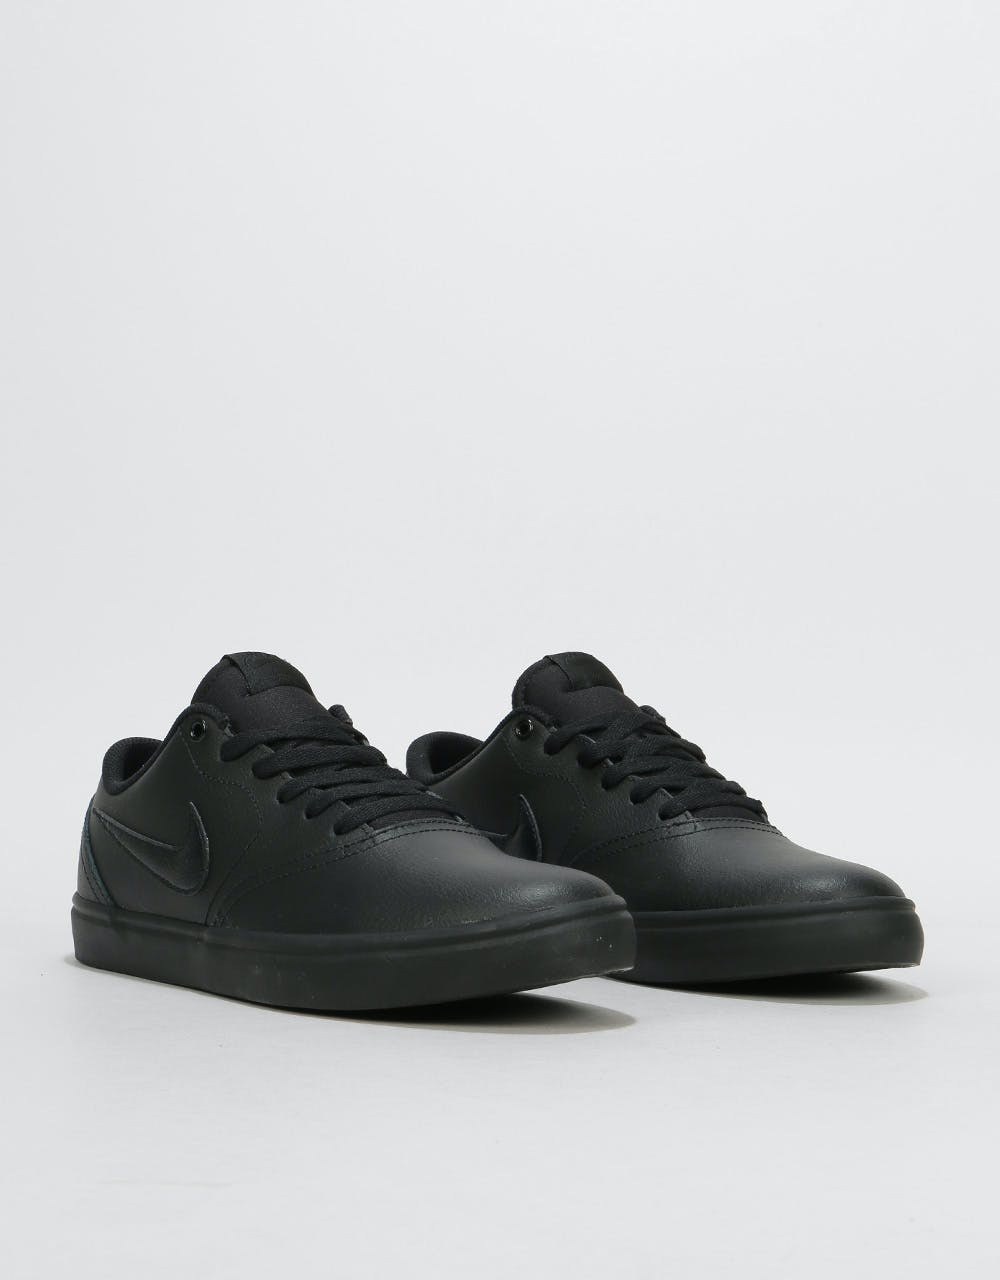 Nike SB Check Solarsoft Skate Shoes - Black/Black-Gunsmoke